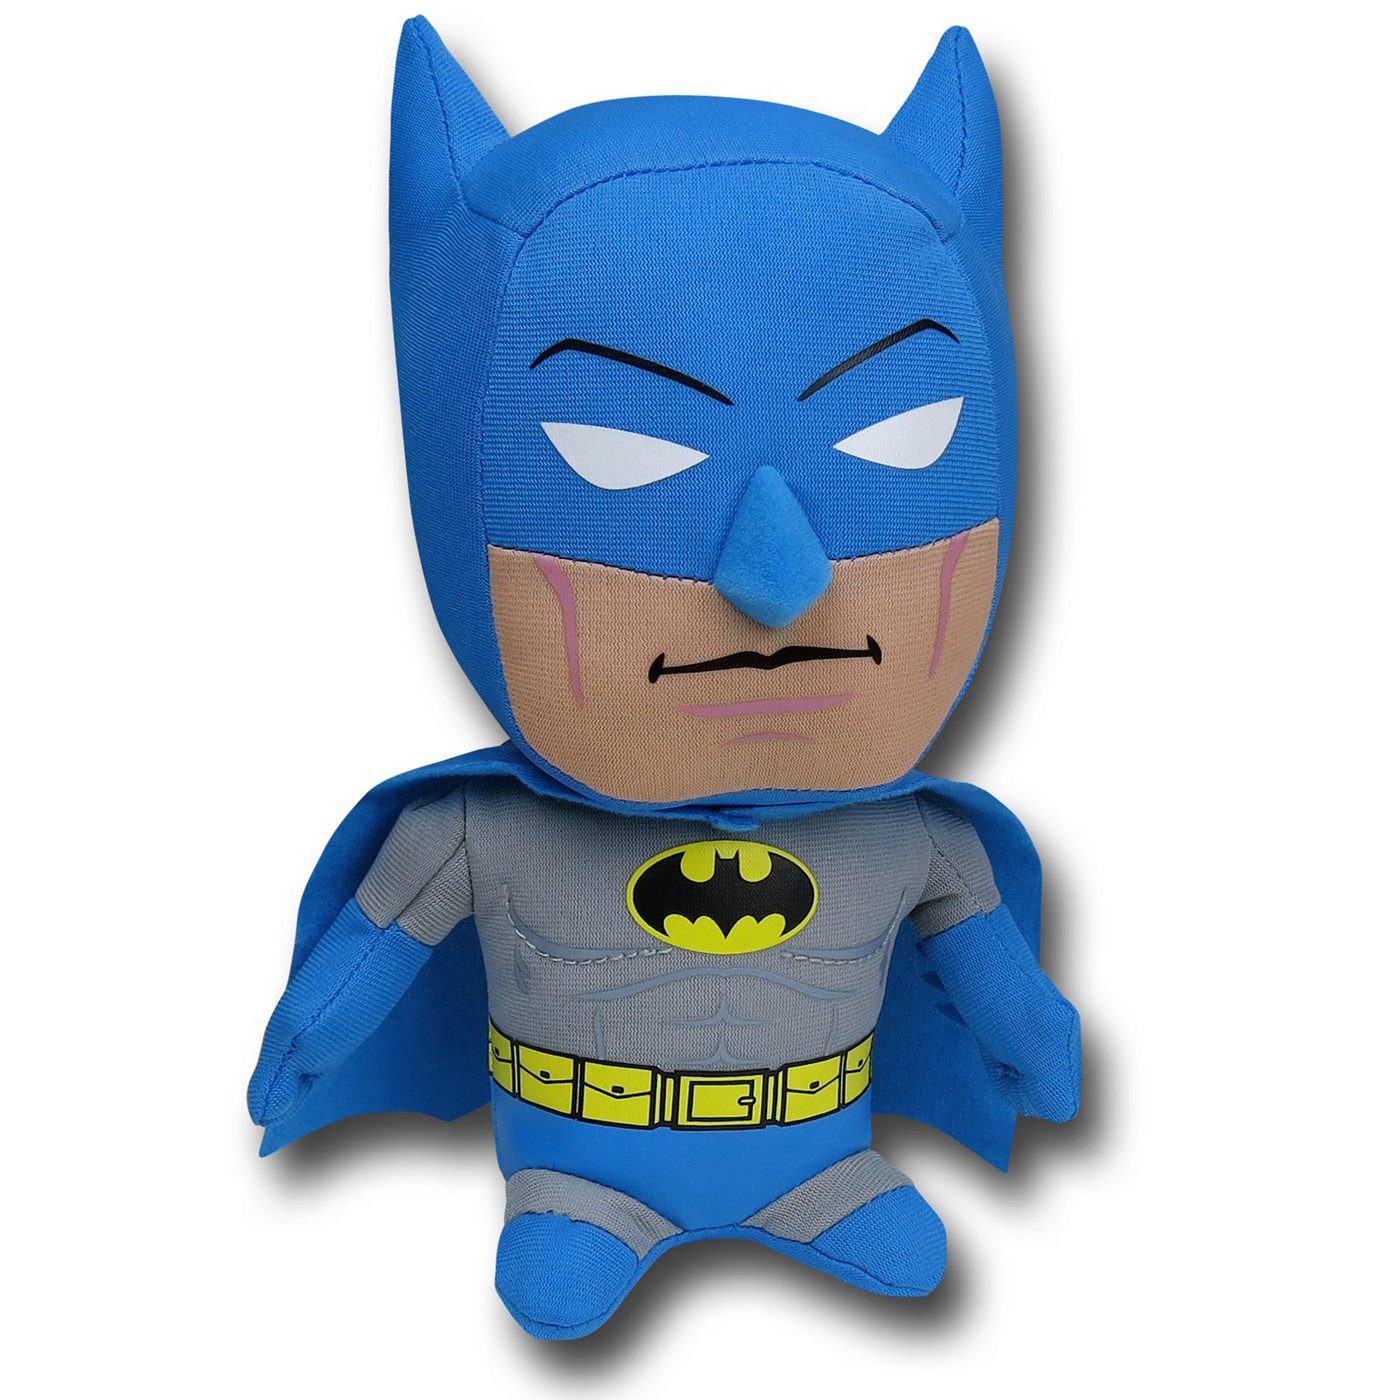 Batman Super Deformed Plush